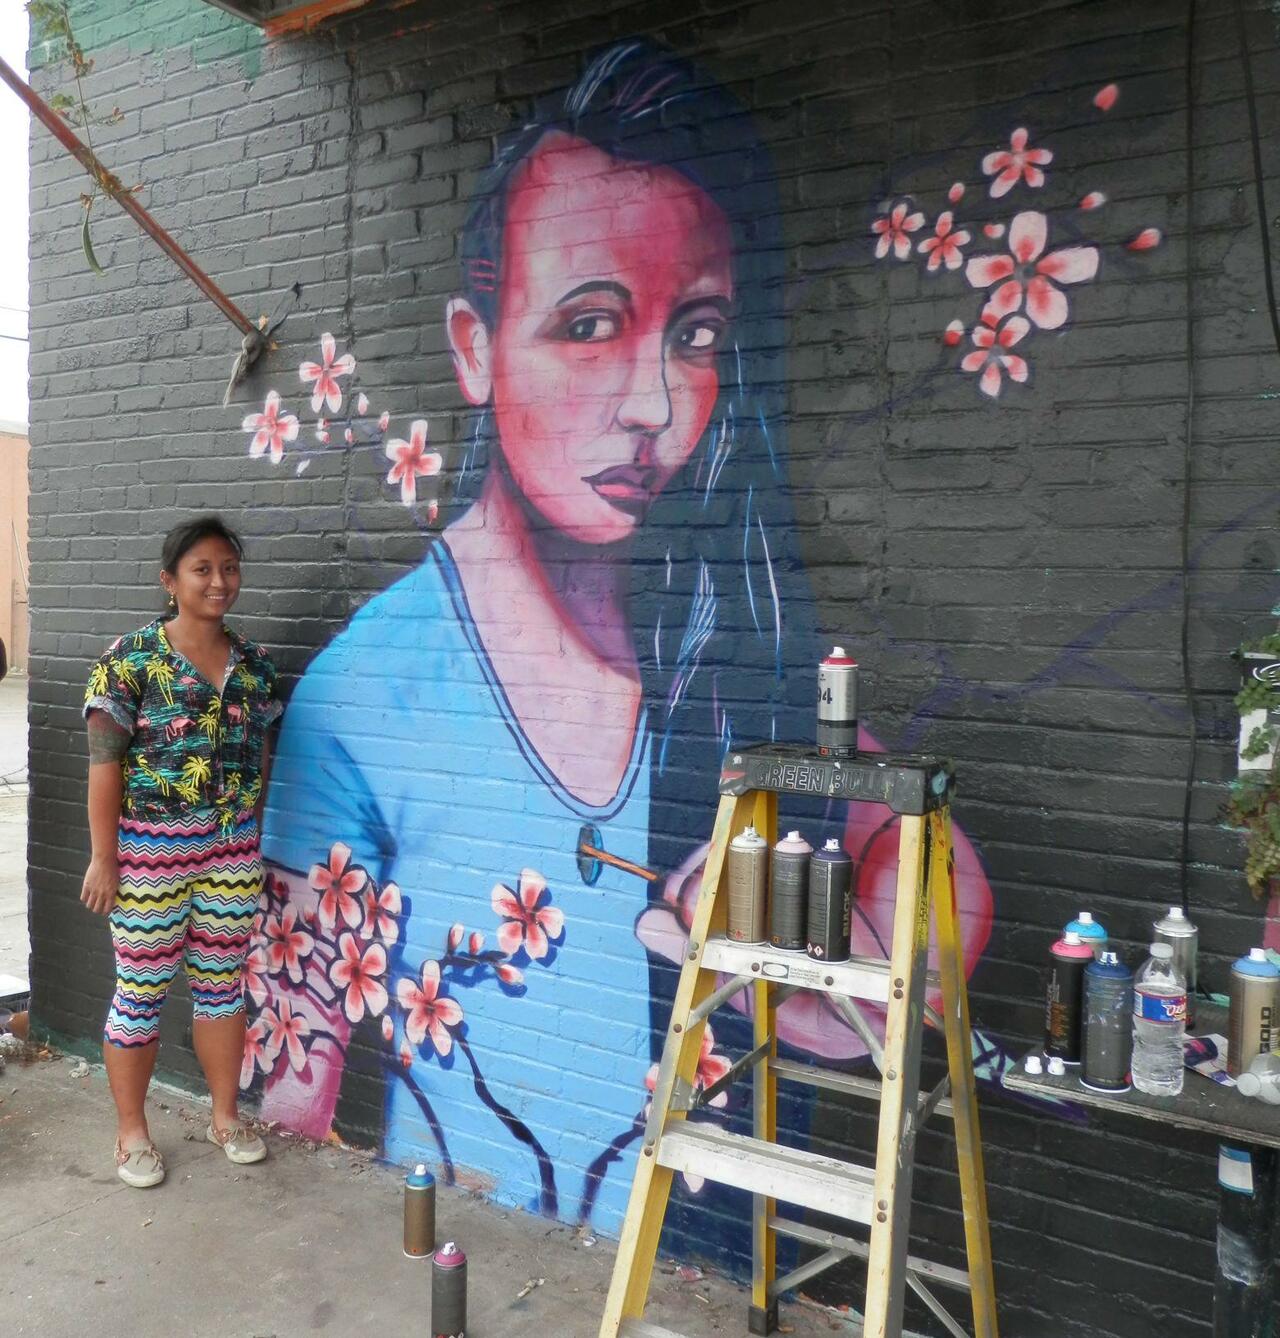 RT @JohnRMoffitt: #Houston #Graffiti #Streetart Royal (Houston) working on her art at Super Happy Funland for Meeting of Styles 2015. http://t.co/aN2YIs1eTk